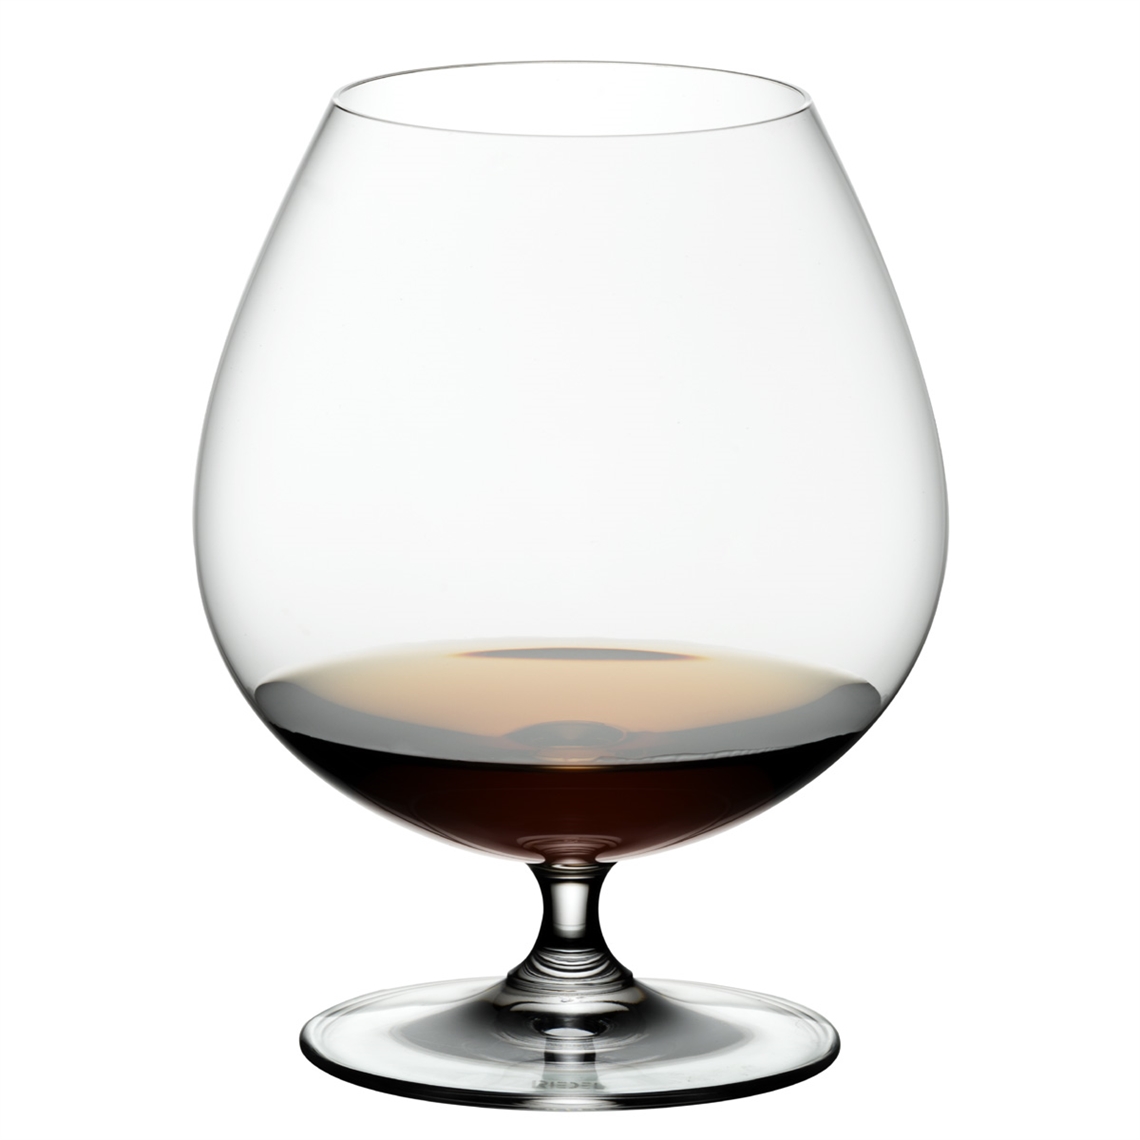 View more white wine glasses from our Spirit Glasses range